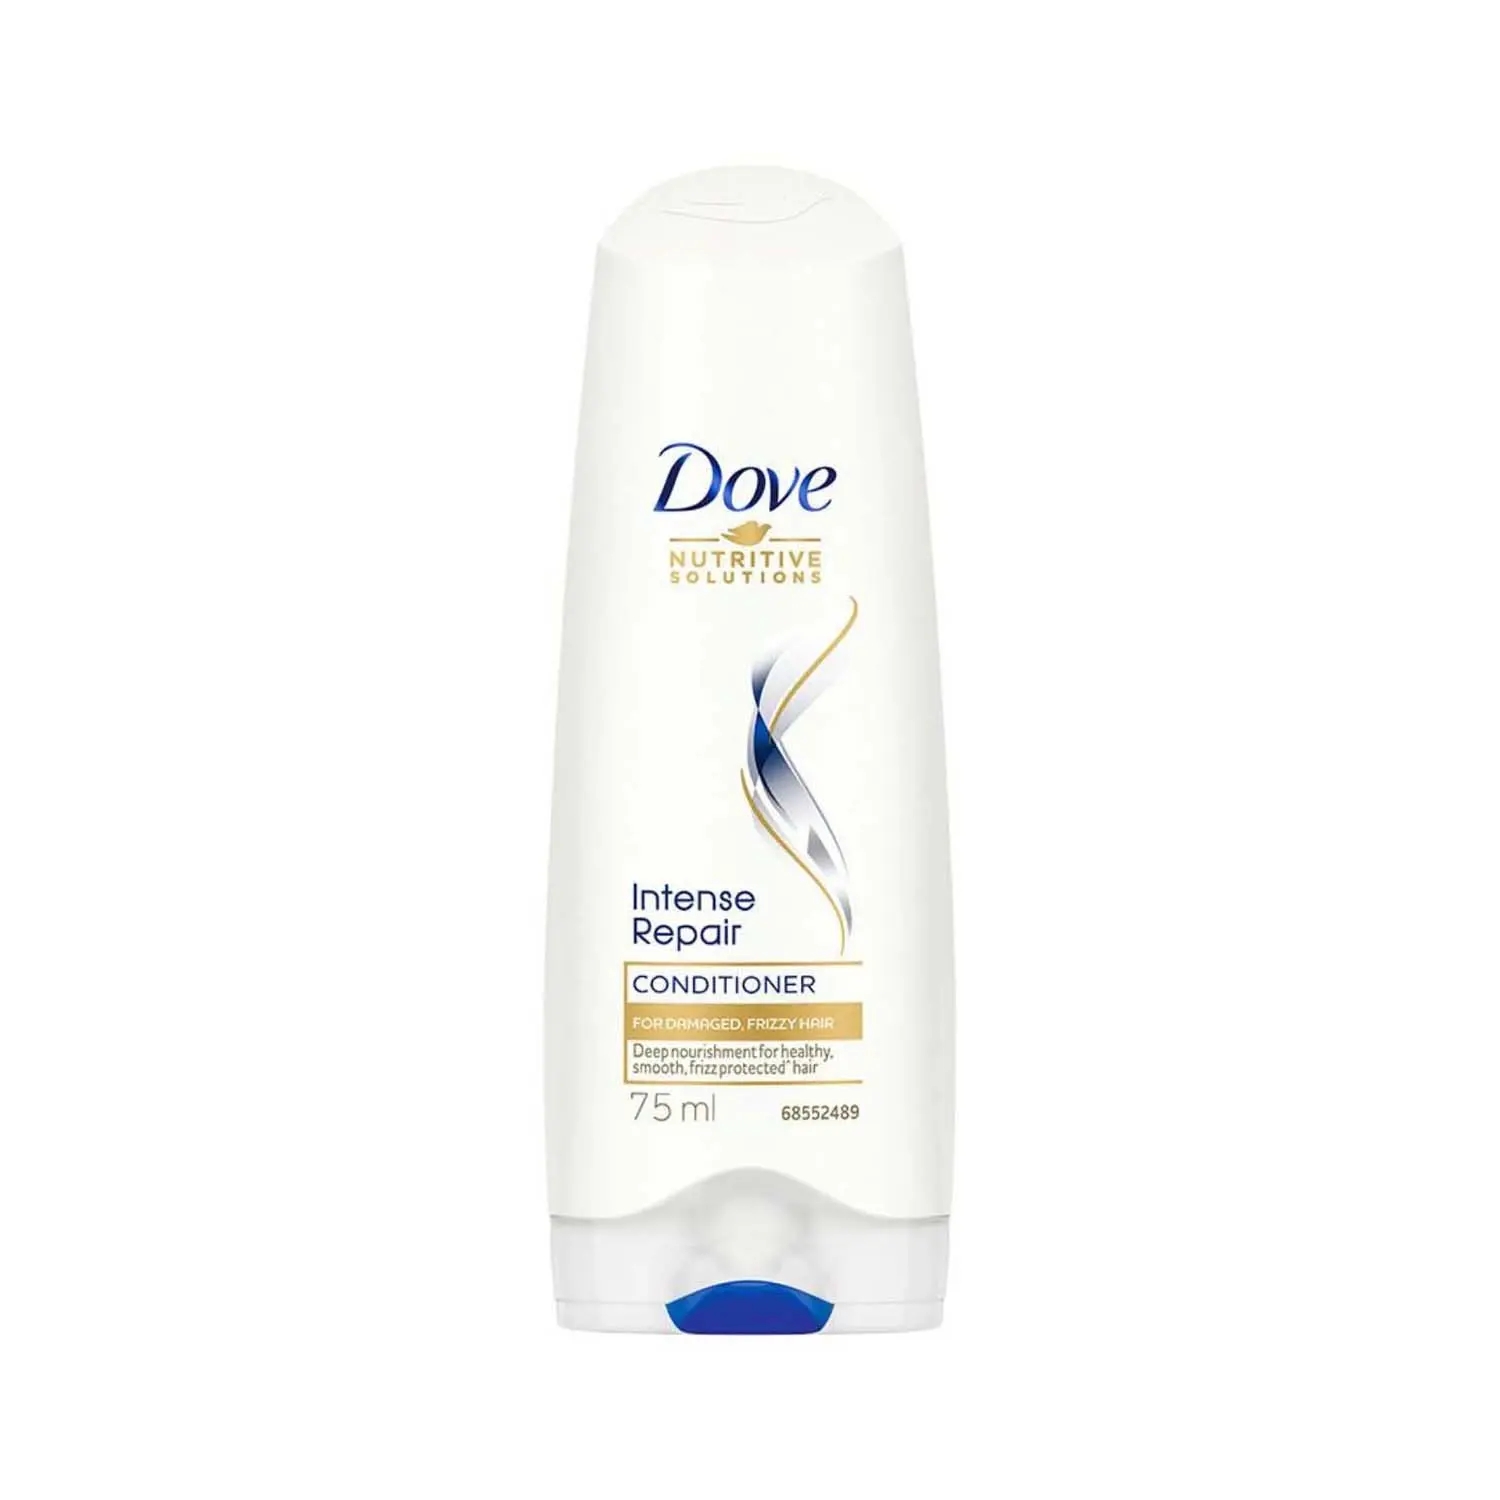 Dove | Dove Intense Repair Conditioner (75ml)